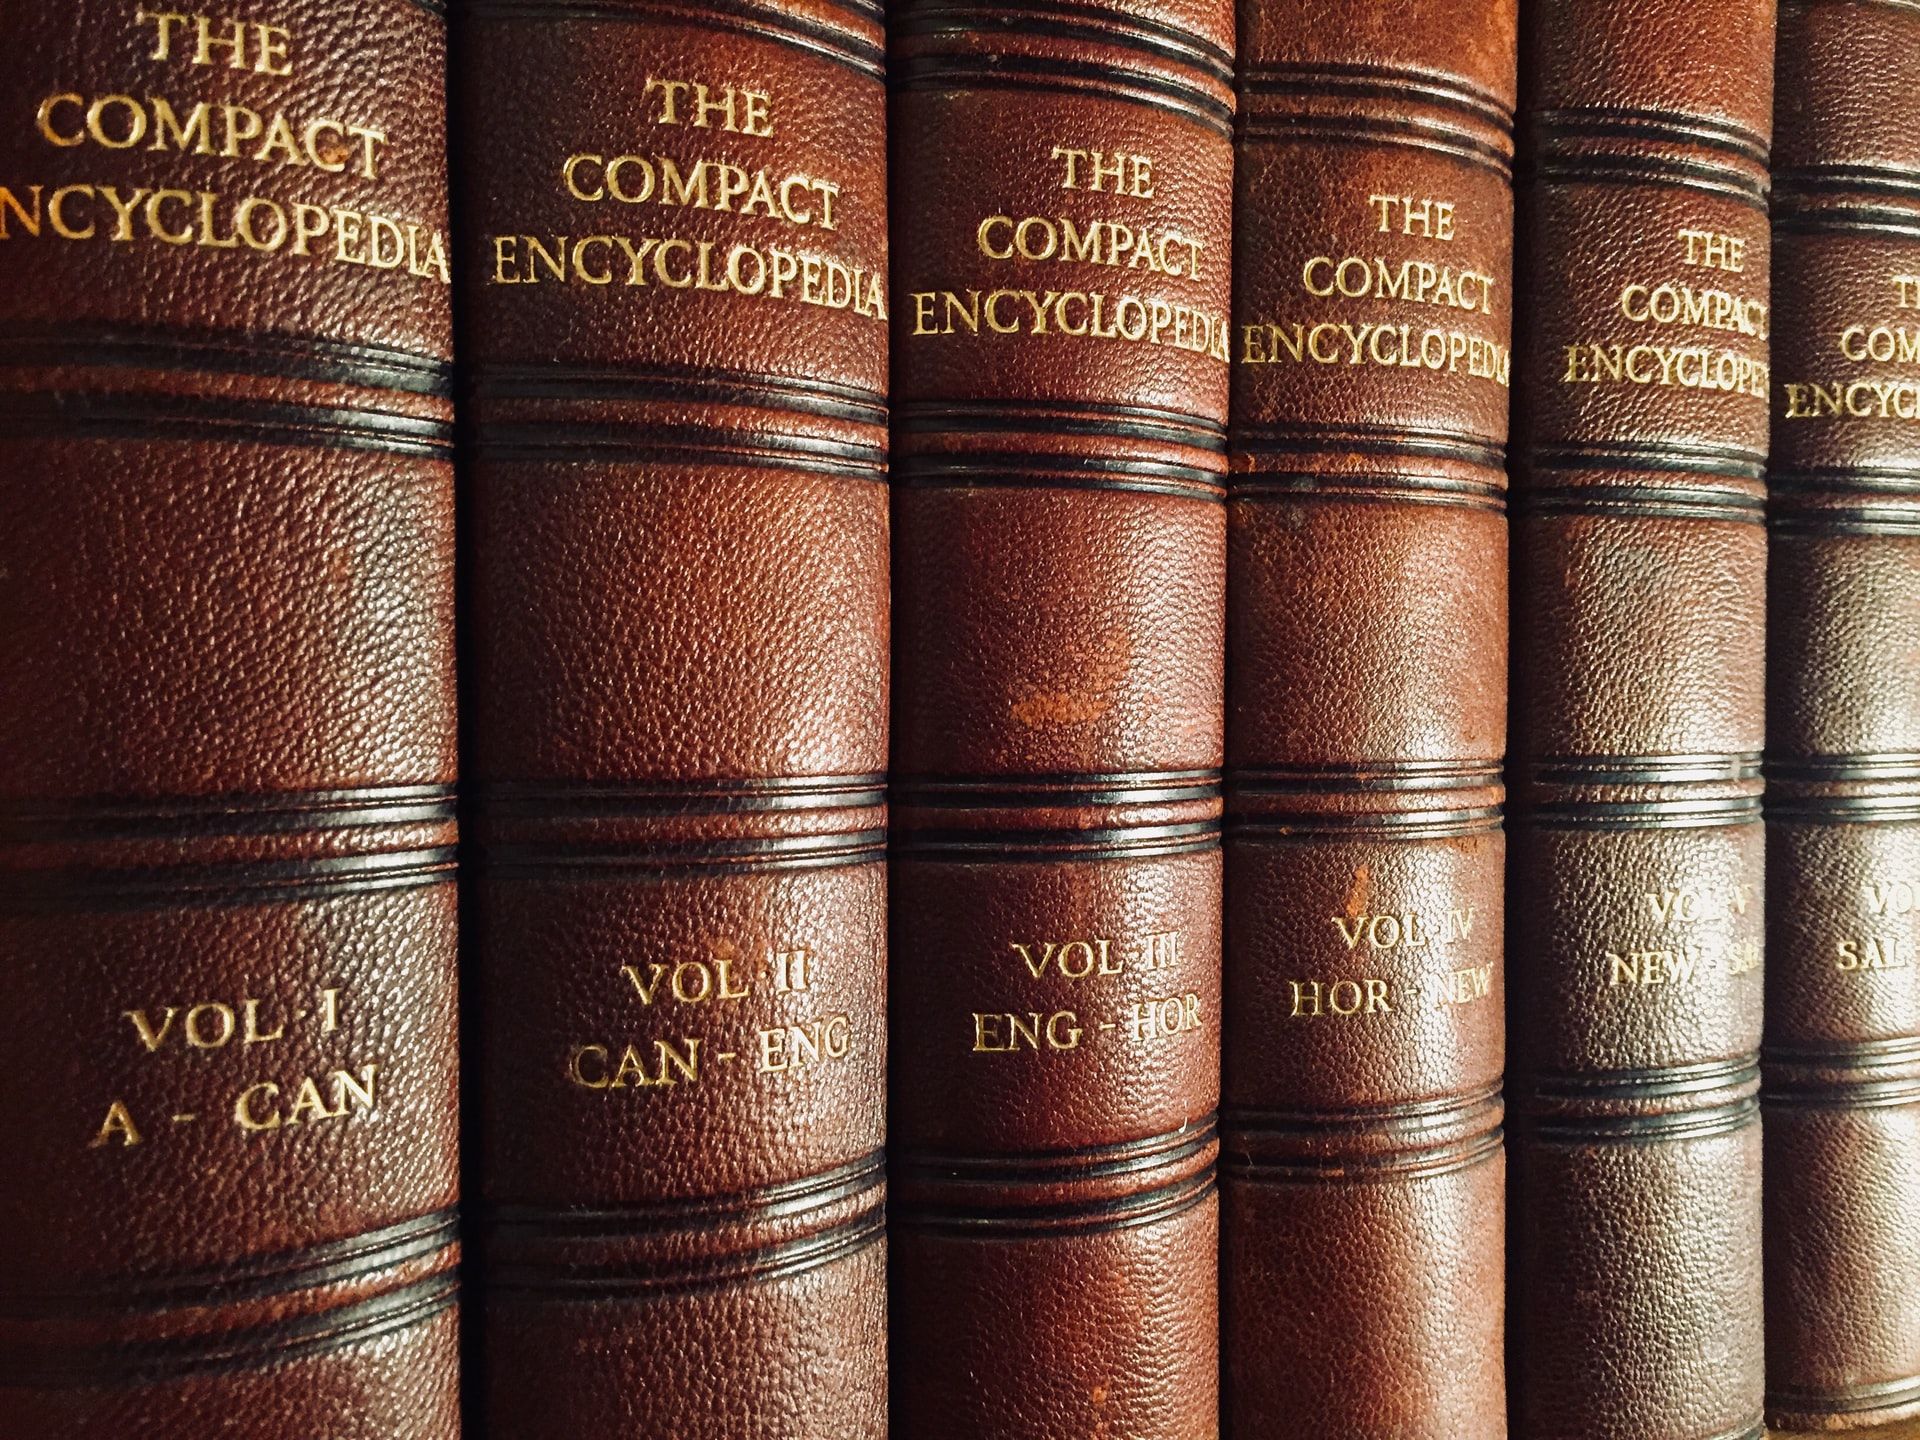 Image shows a collection of encyclopedias